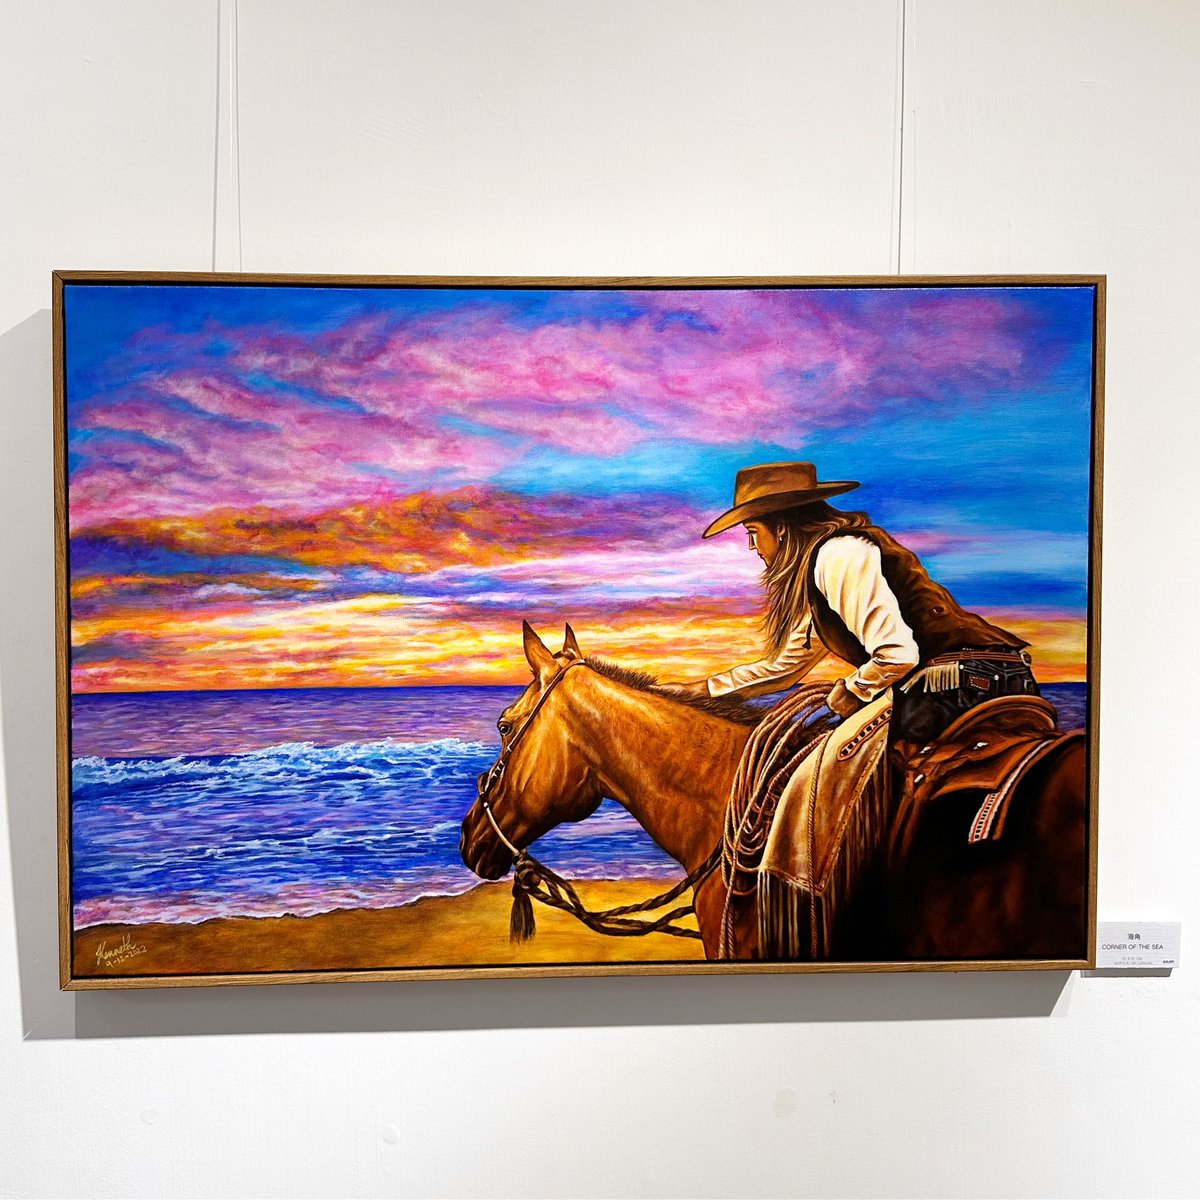 “ corner of the sea “ 

60x90cm 
Acrylic on canvas 

#horse #horsepotrait #cowboy #westernlife #acrylicpainting